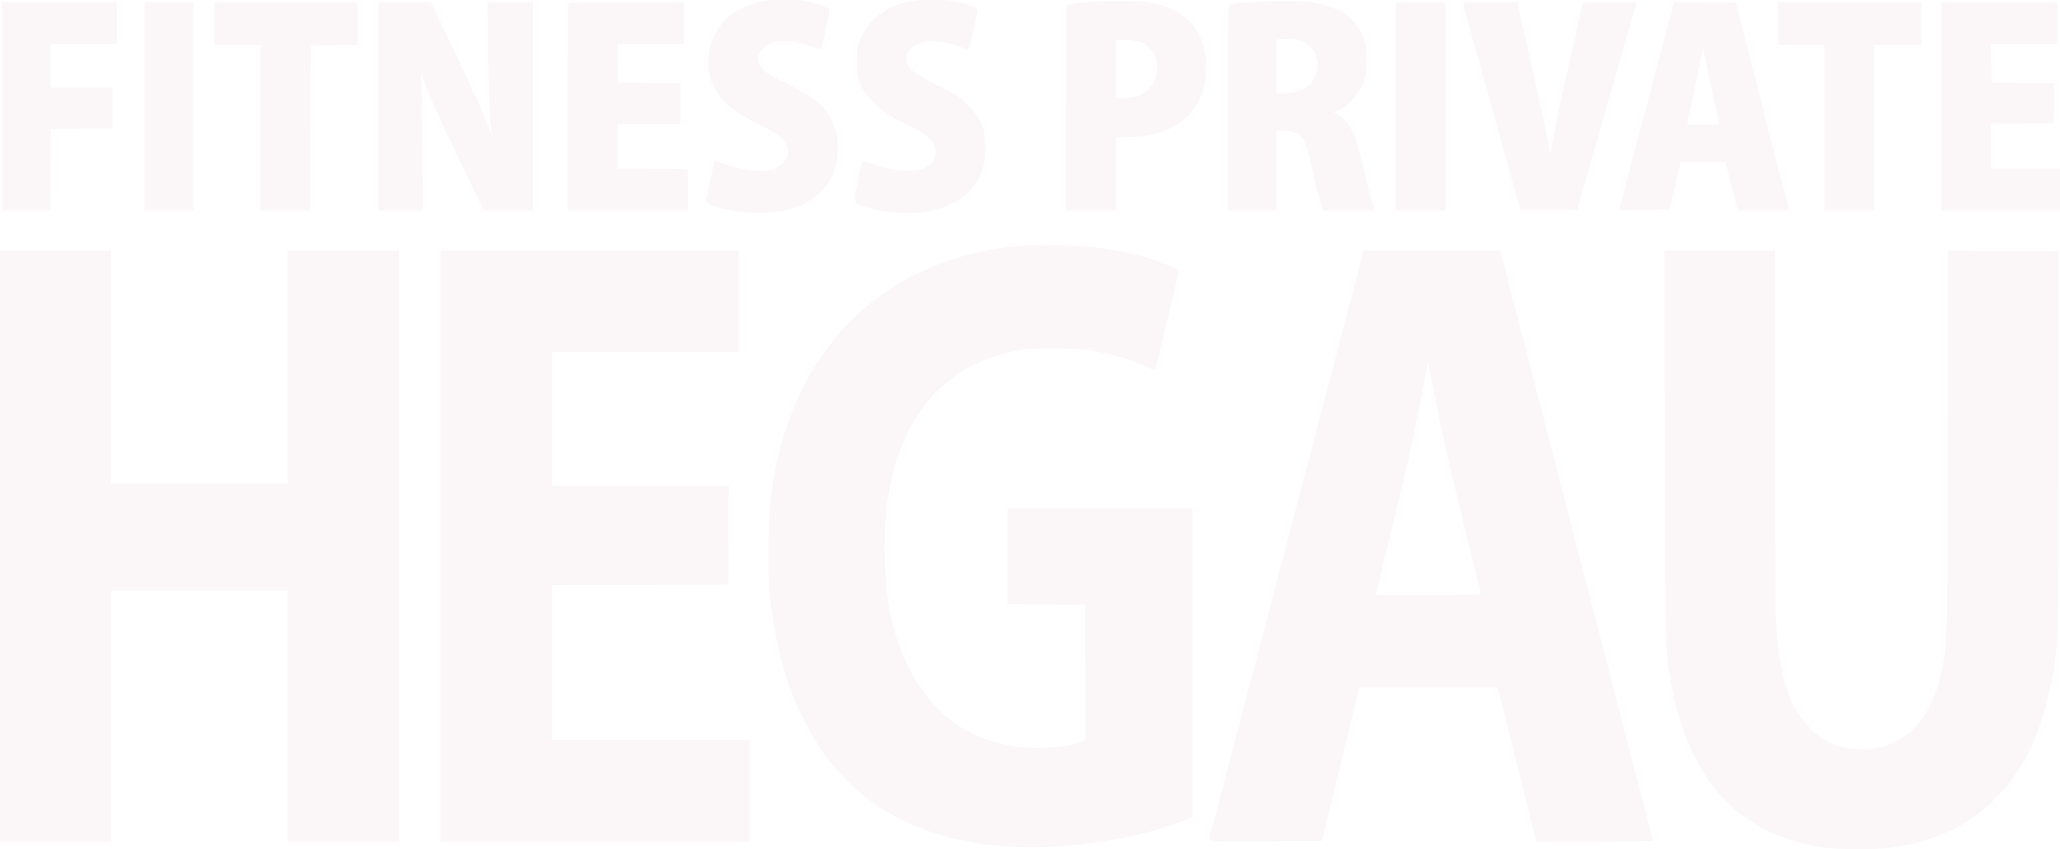 Logo Fitness Private Hegau